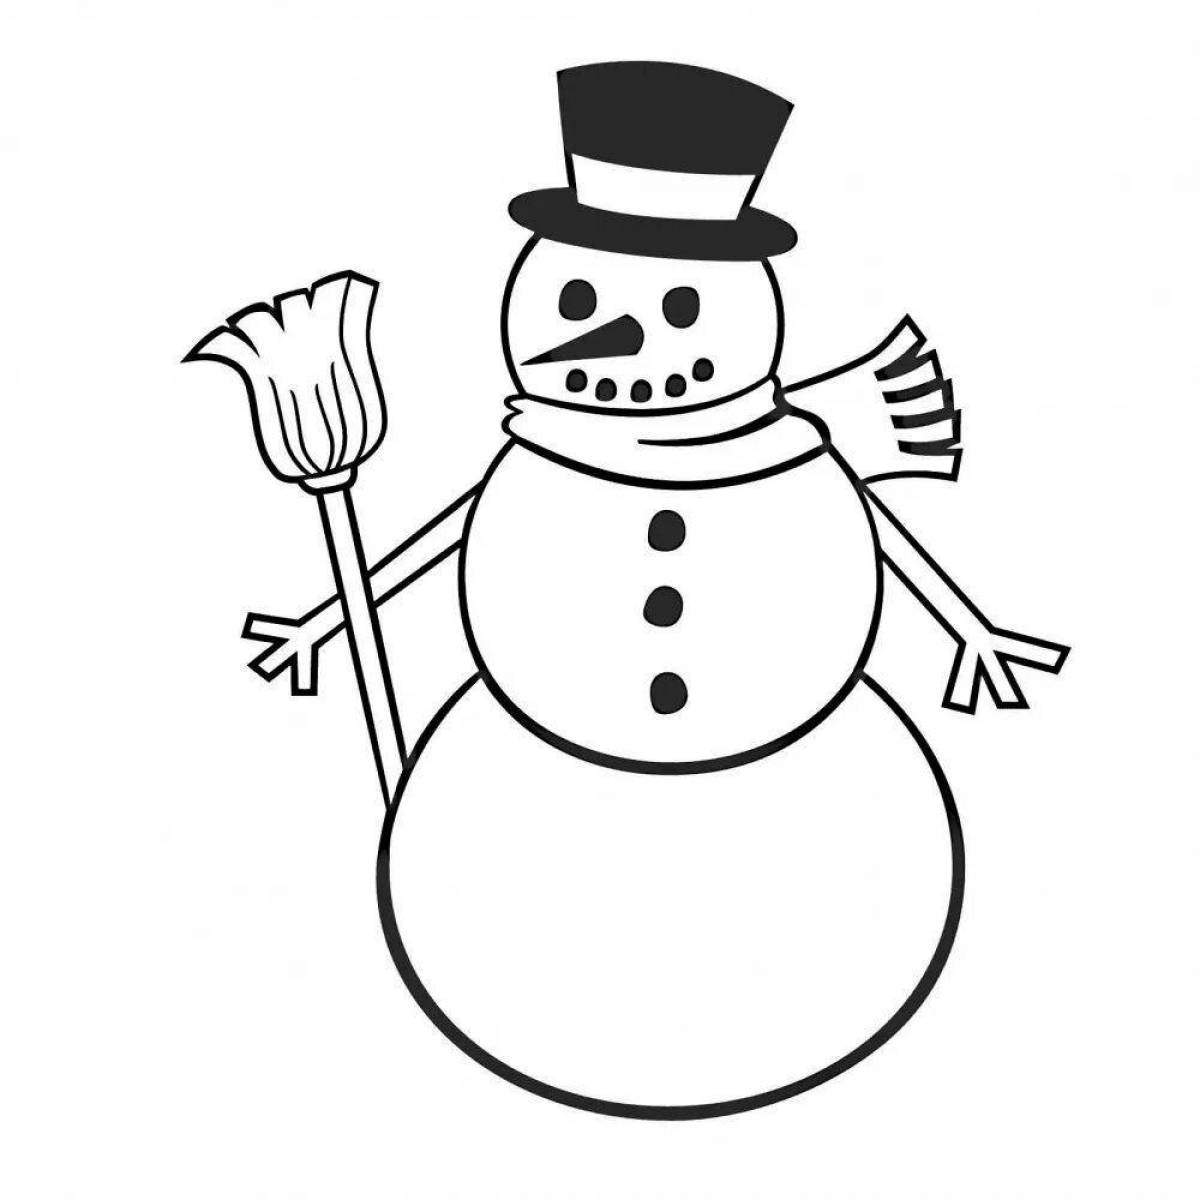 Snowman#1